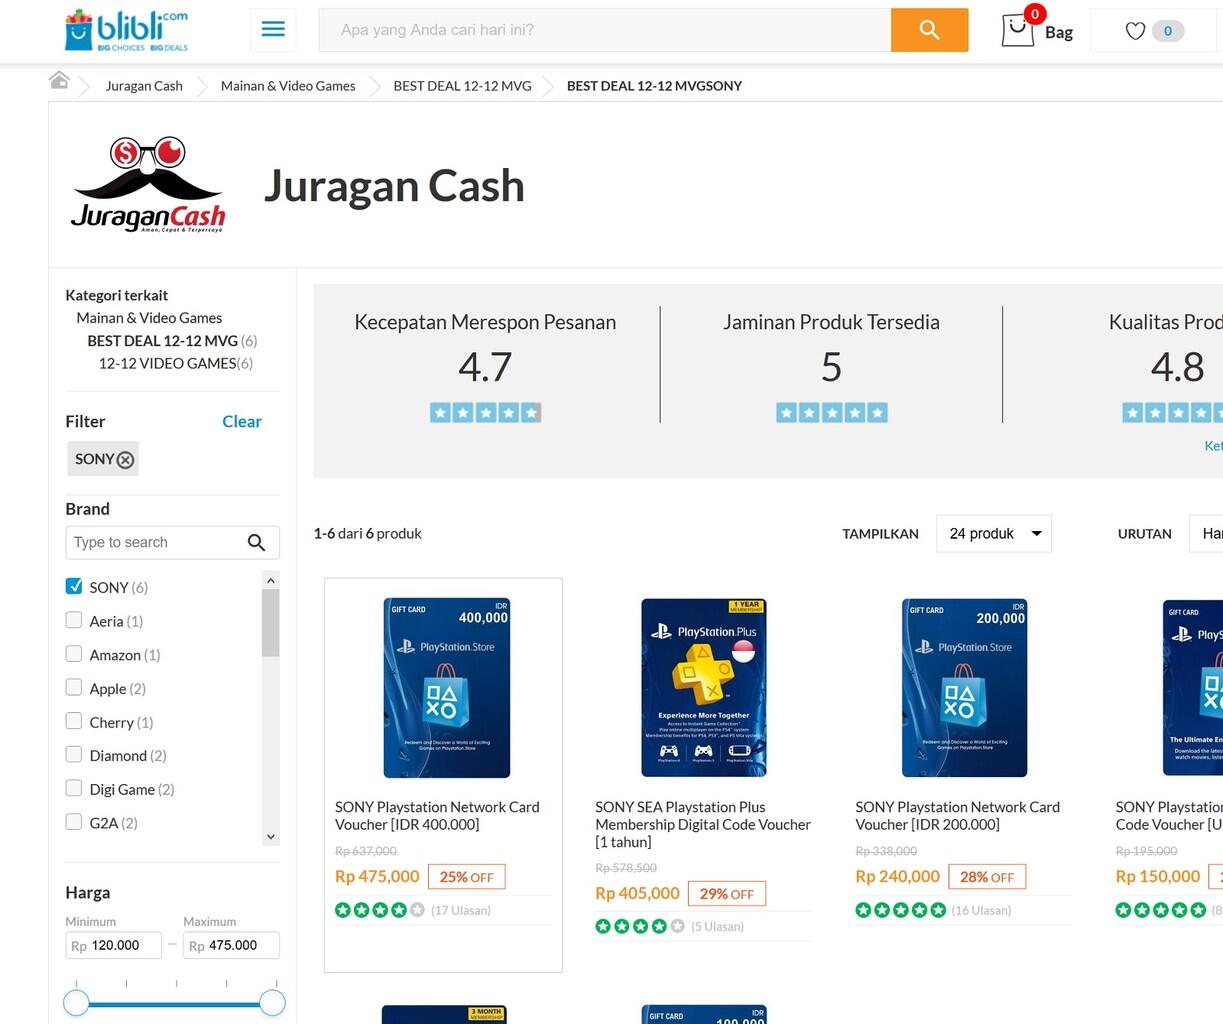 Promo Cashback 25% Blibli.com, sistem ga jelas customer yang dirugikan.